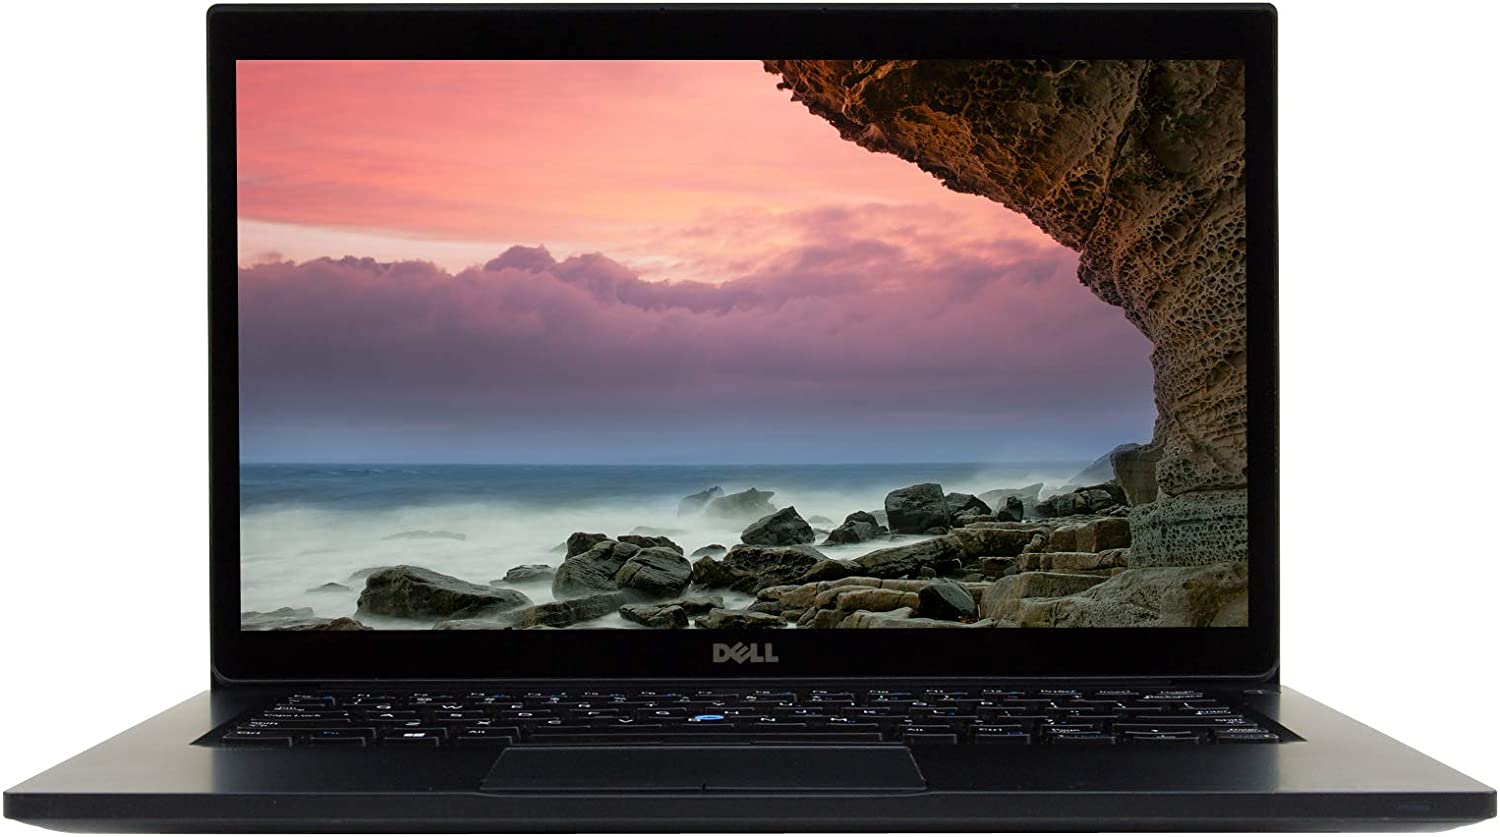 Dell Latitude 7480 Core i5 7300U 2.60 GHz, 14 Inches HD Display, Windows 10 Pro (Renewed)